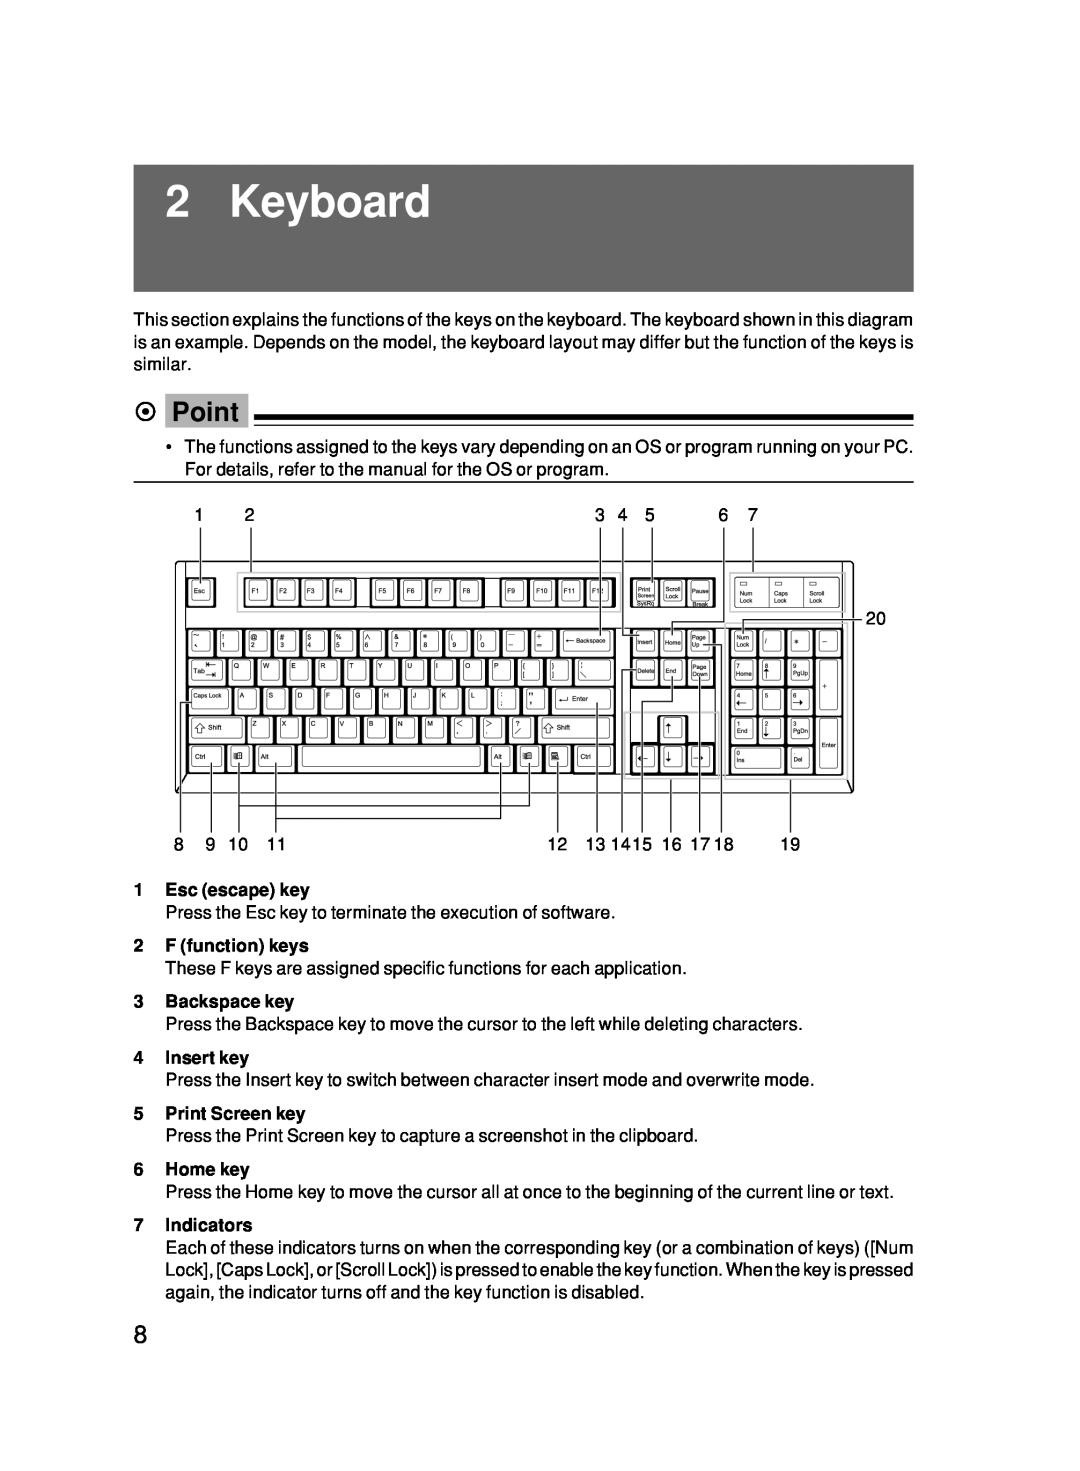 Fujitsu 500 Keyboard, Esc escape key, F function keys, Backspace key, Insert key, Print Screen key, Home key, Indicators 